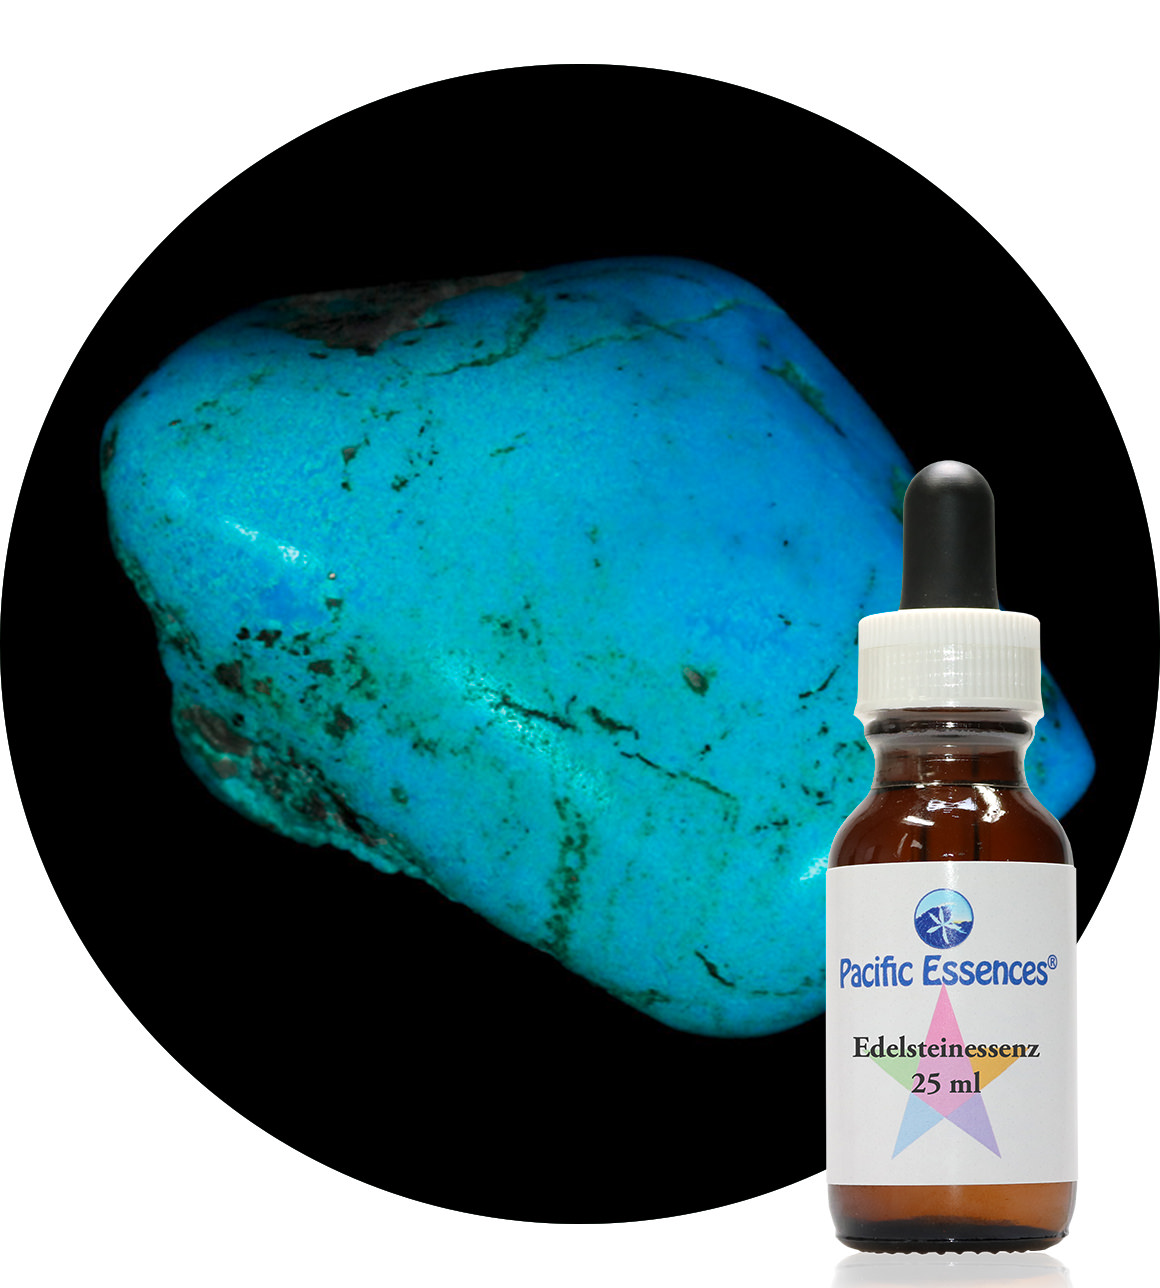 Turquoise (Pacific Essences)